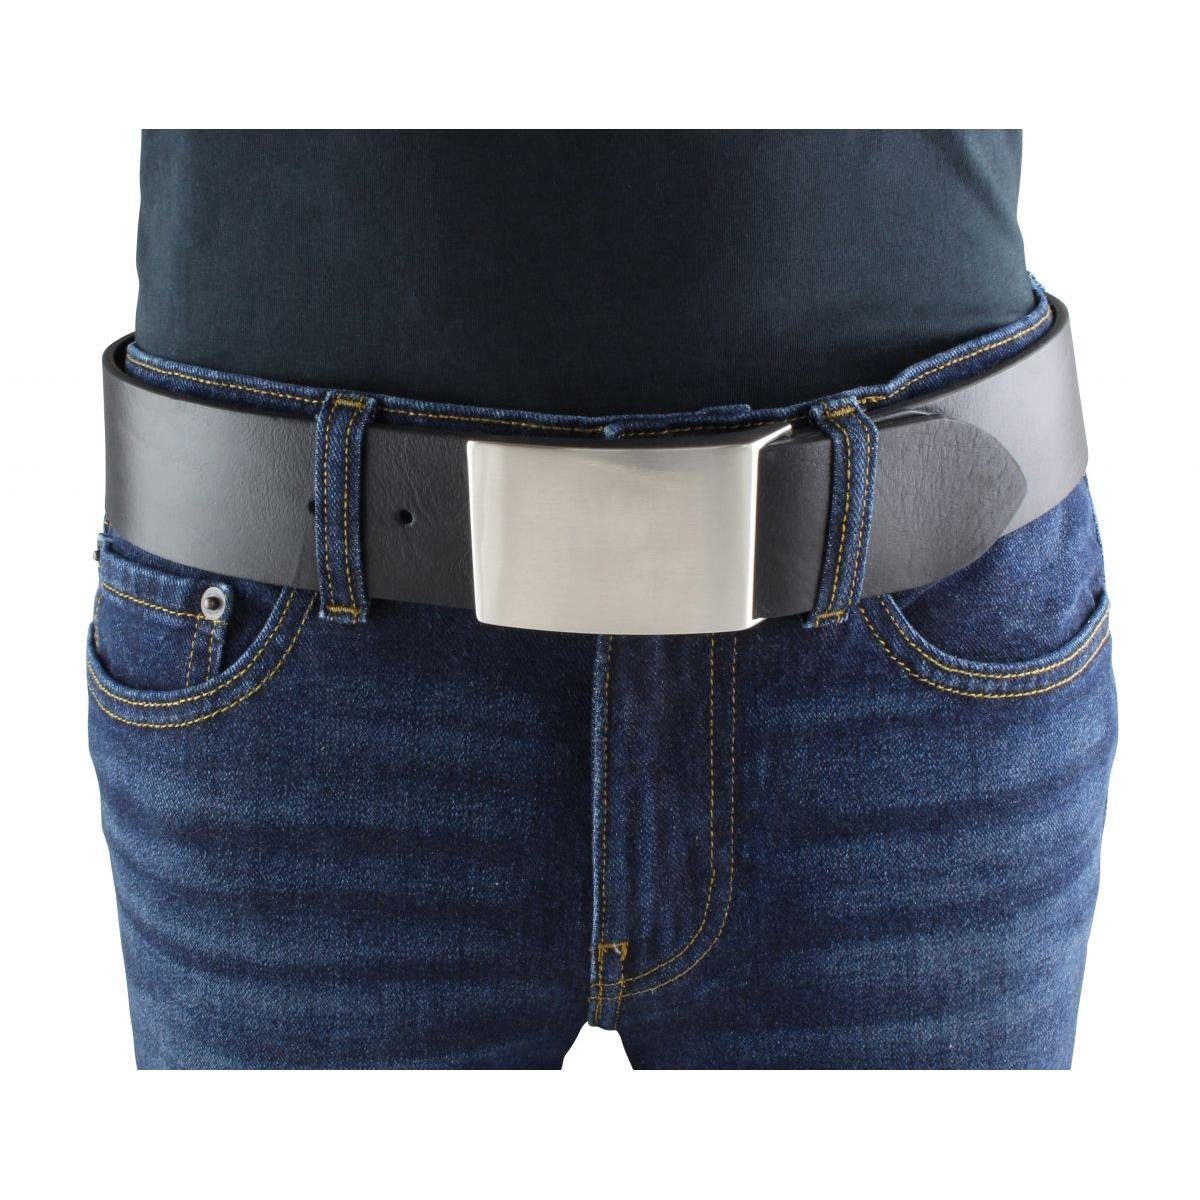 für 5,0 BELTINGER - Vollrindleder Jeans-Gürtel - Herren aus Marine, Gürtel Silber 50mm cm Jeans Ledergürtel